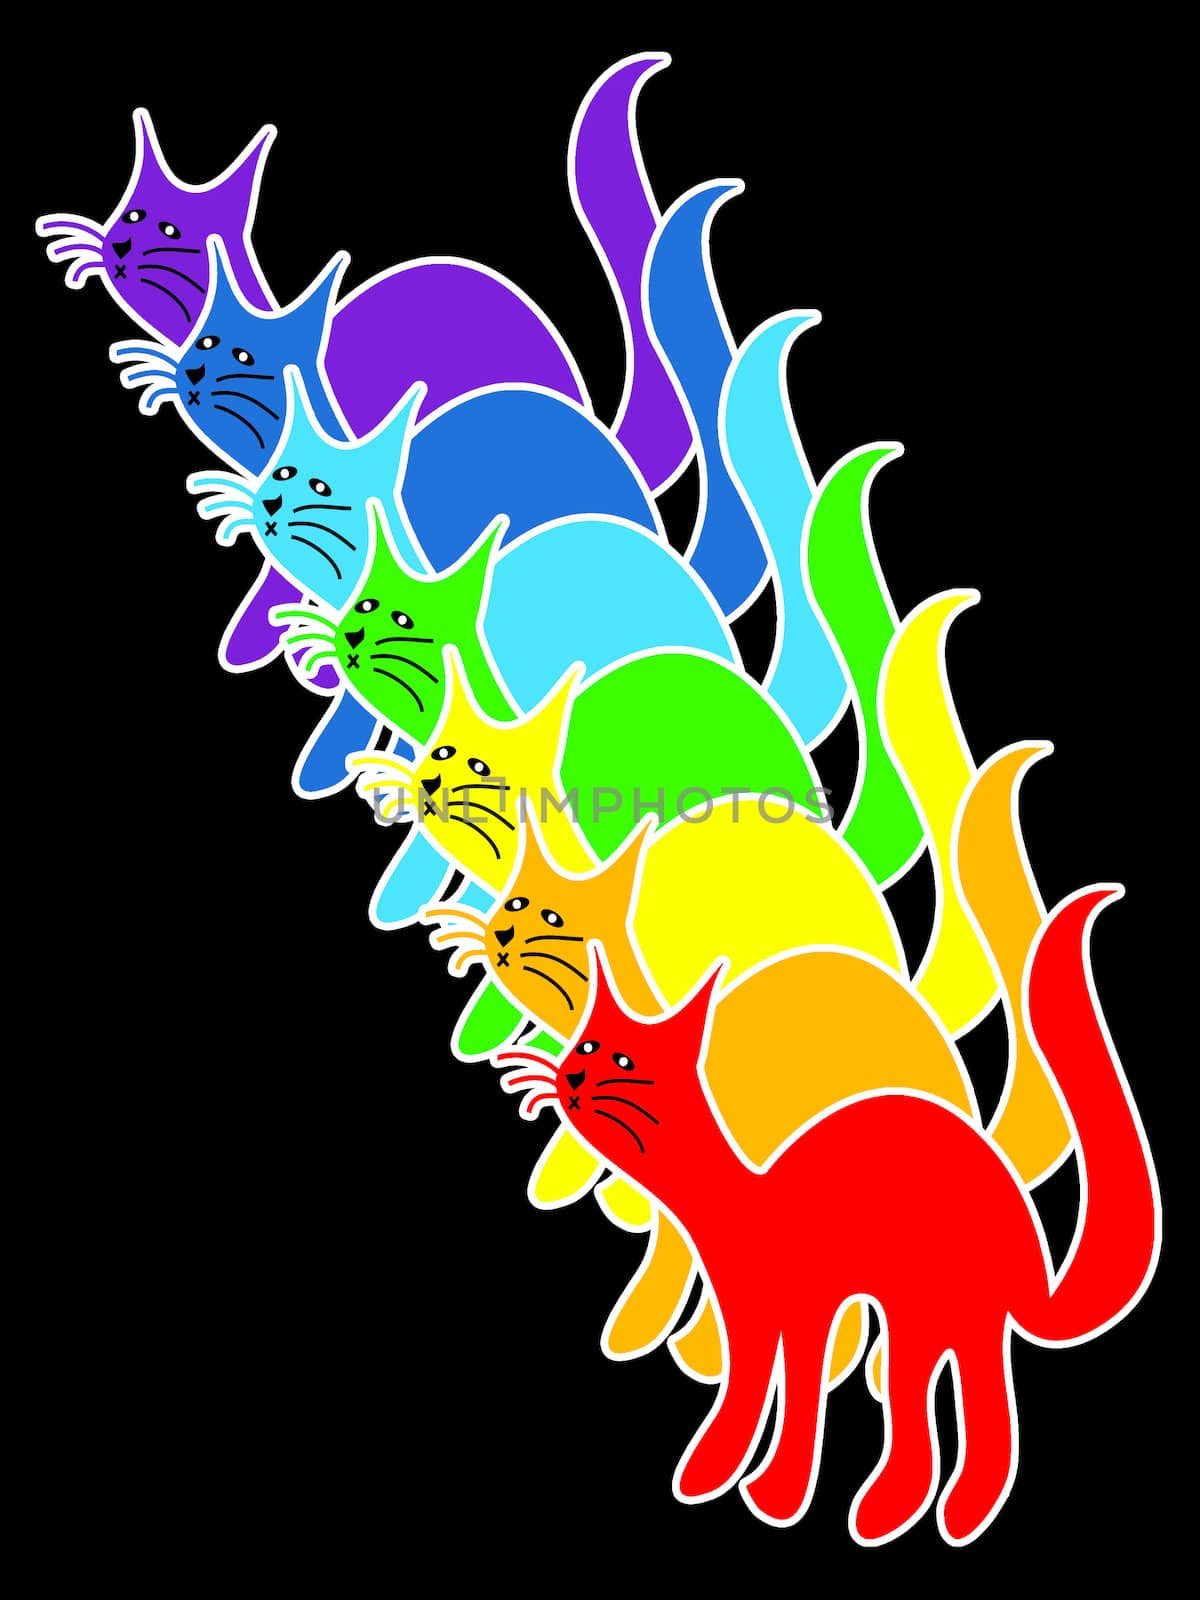 Rainbow cats by palinchak